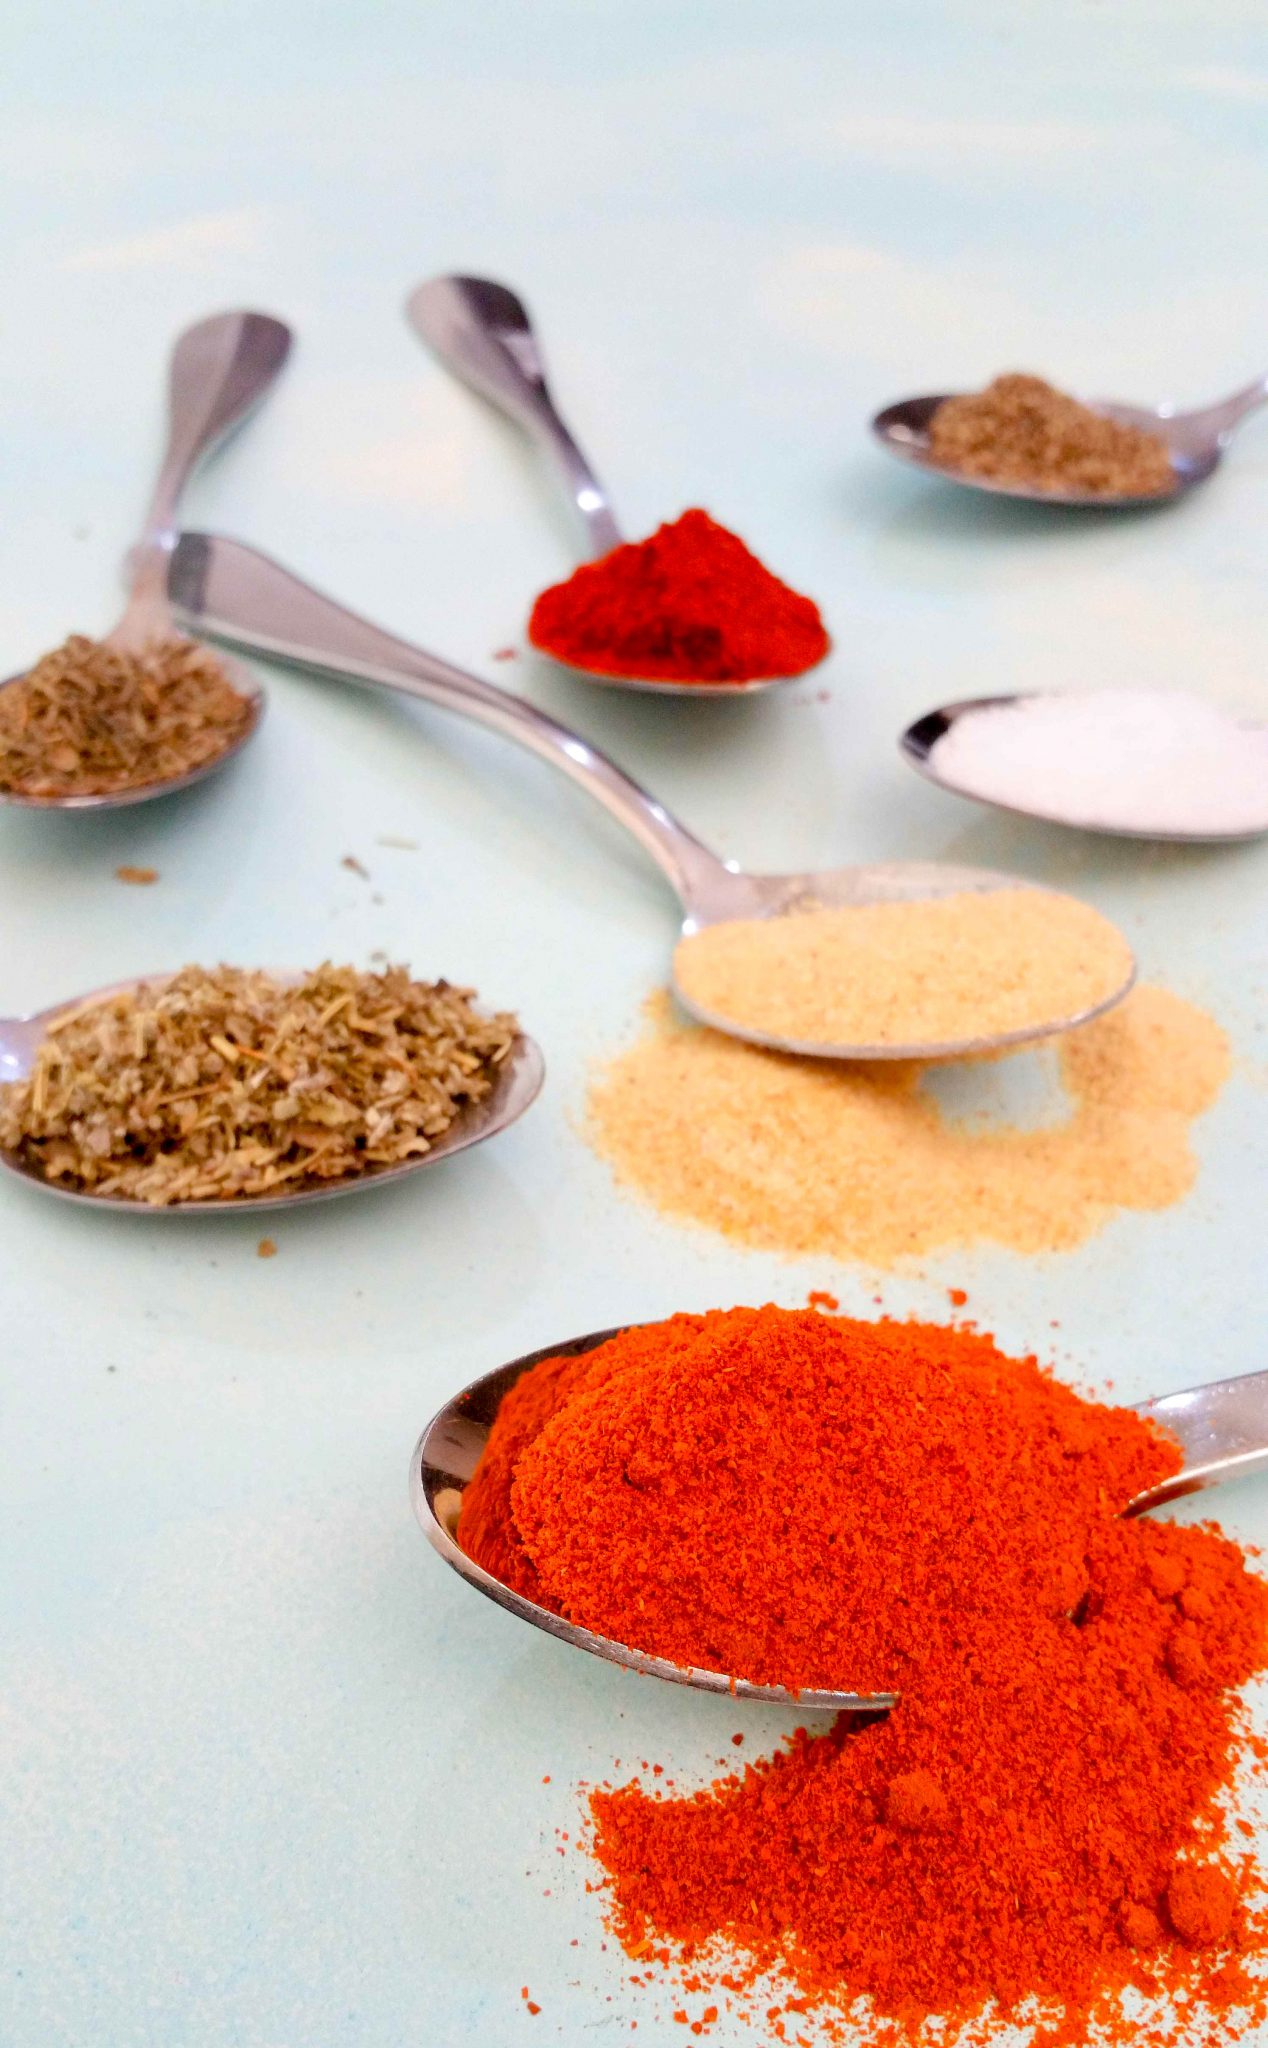 Seasoned Salt Recipe Make Your Own Spice Blends - Sweet Savant